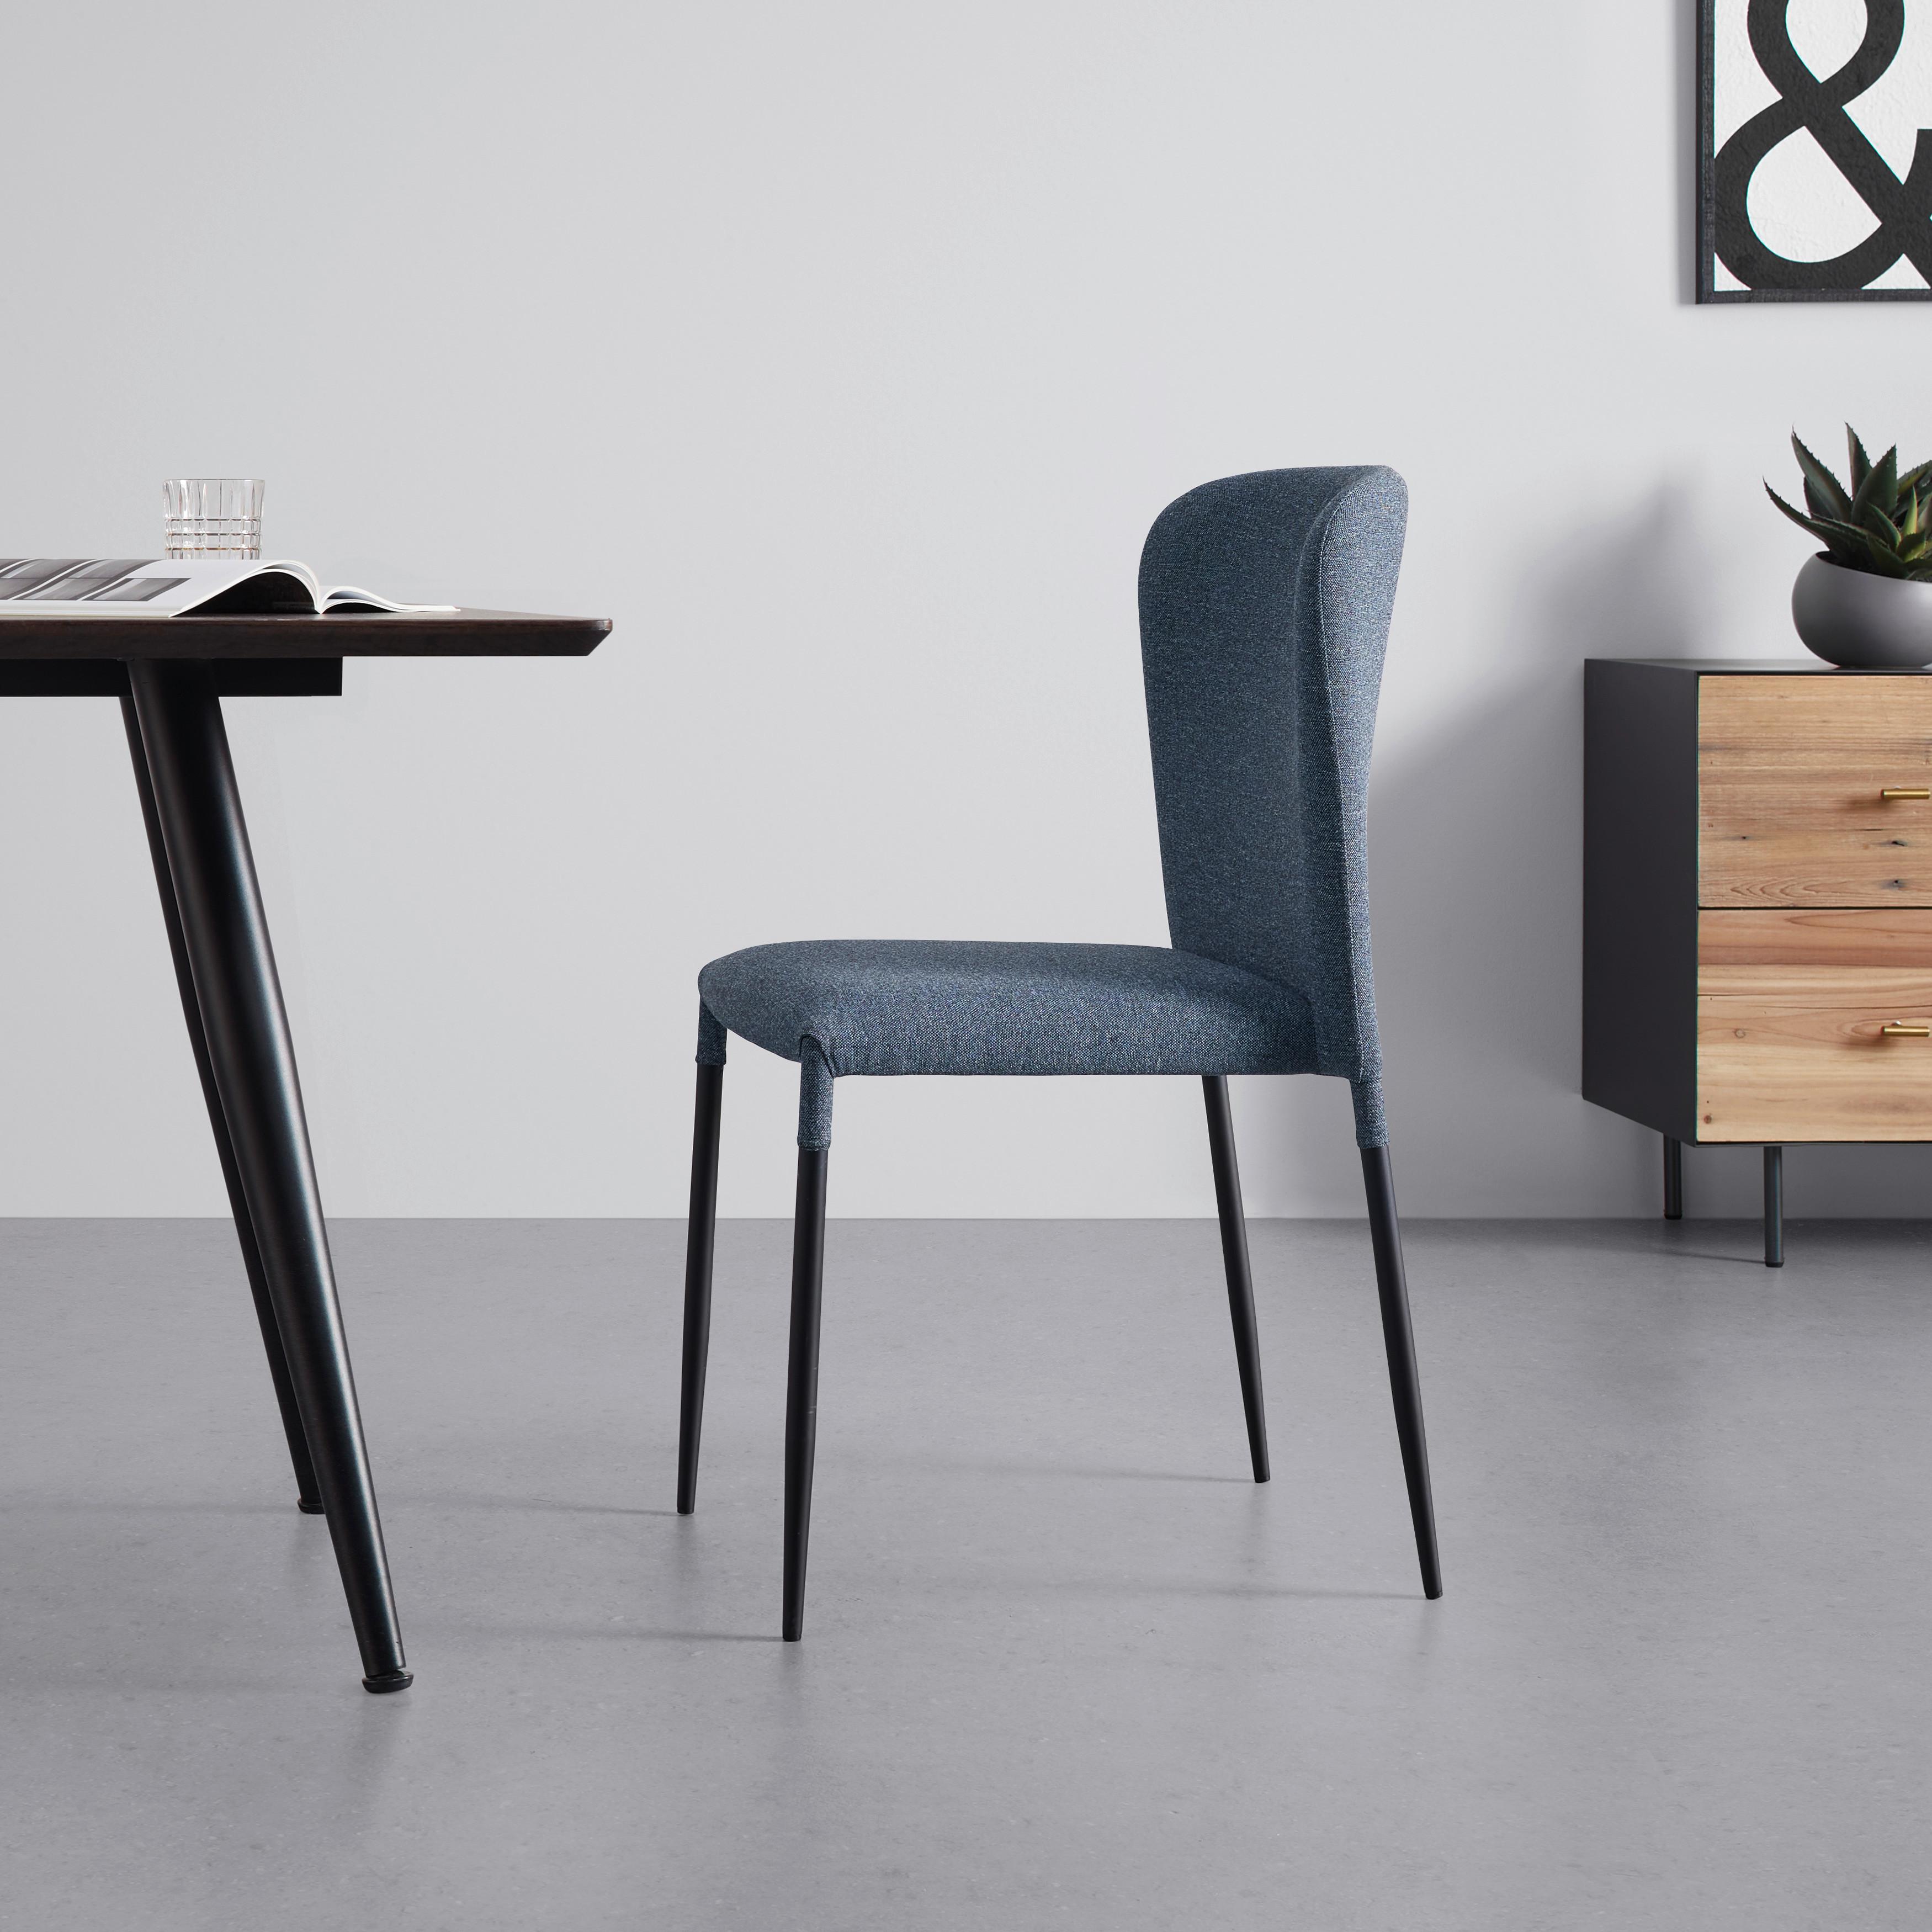 Stuhl "Nio", Webstoff, blau, Gepolstert - Blau/Schwarz, MODERN, Holz/Textil (43/86/53cm) - Bessagi Home